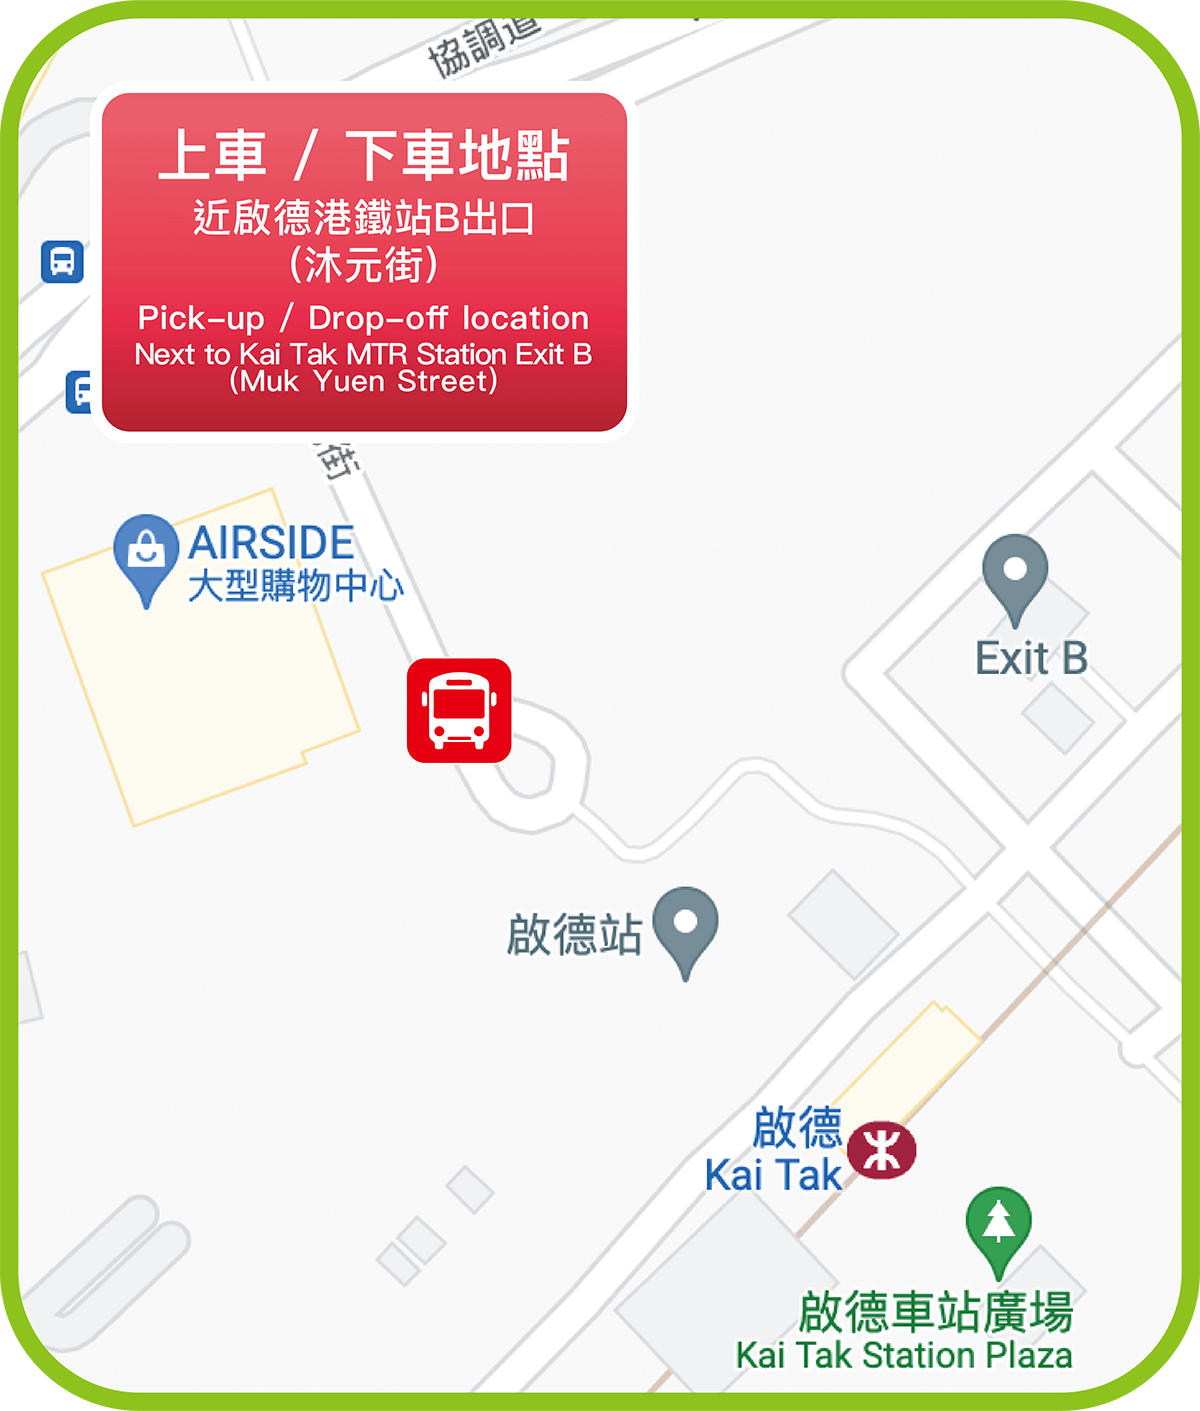 Shuttle Bus Schedule - Kai Tak MTR Station